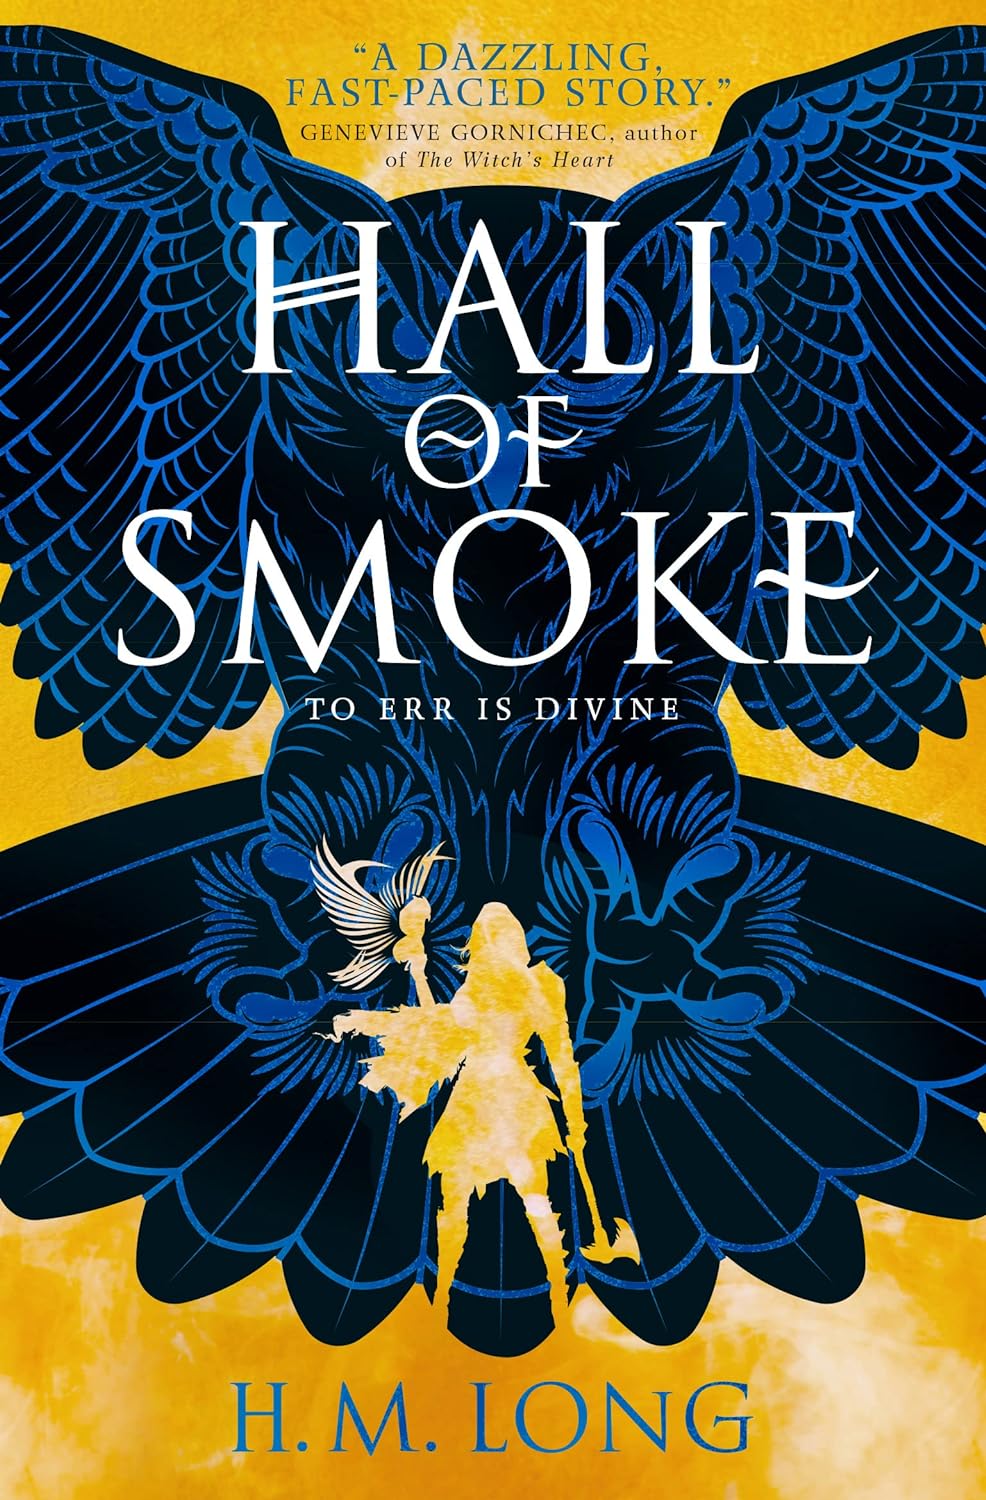 Hall of Smoke (2021, Titan Books)